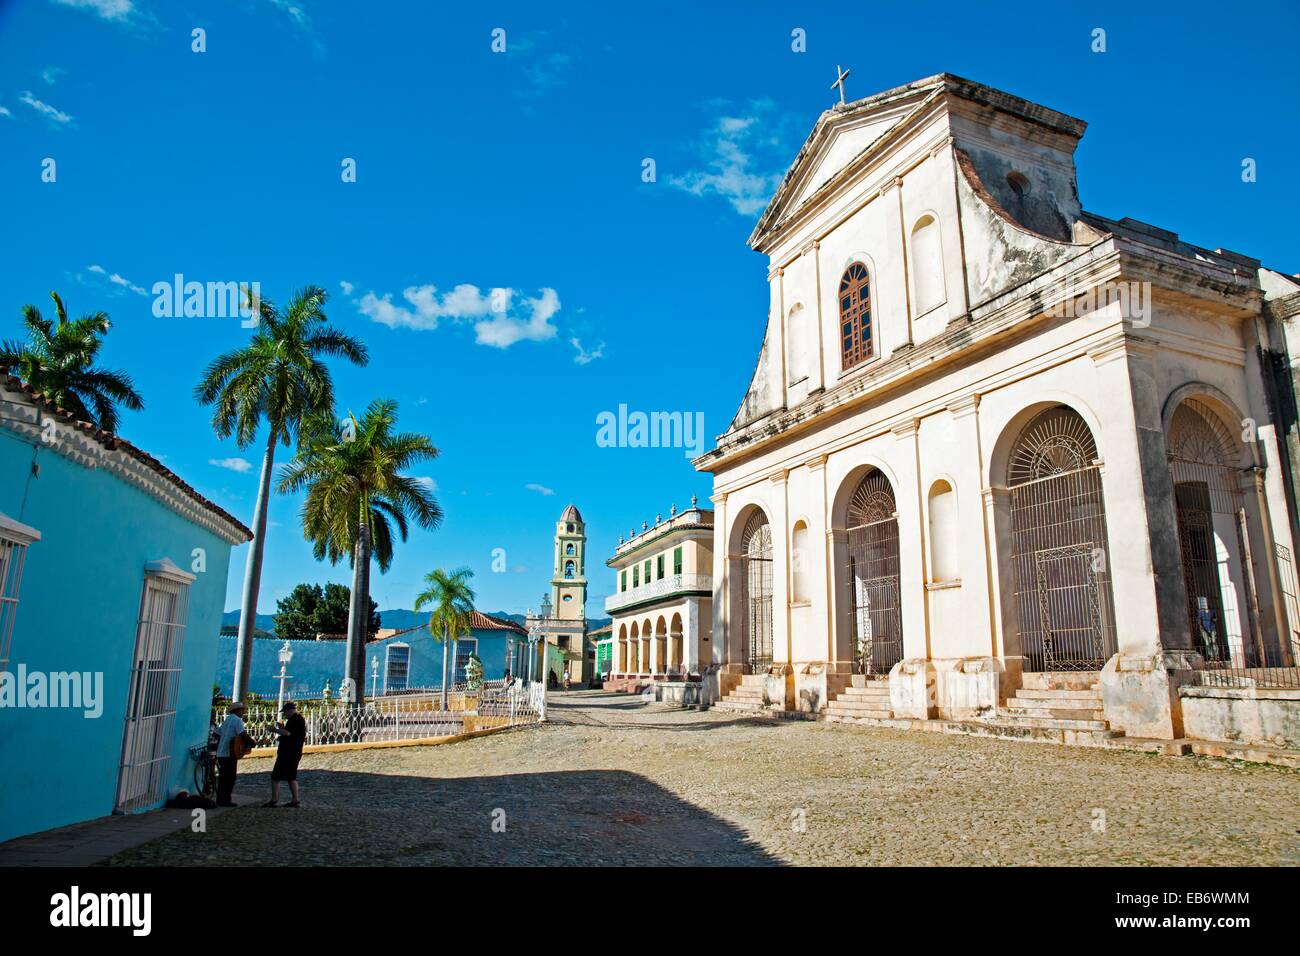 The Holy Trinity church and Main Square plaza Mayor, Trinidad city, Sancti Spiritus Province, Cuba. Stock Photo